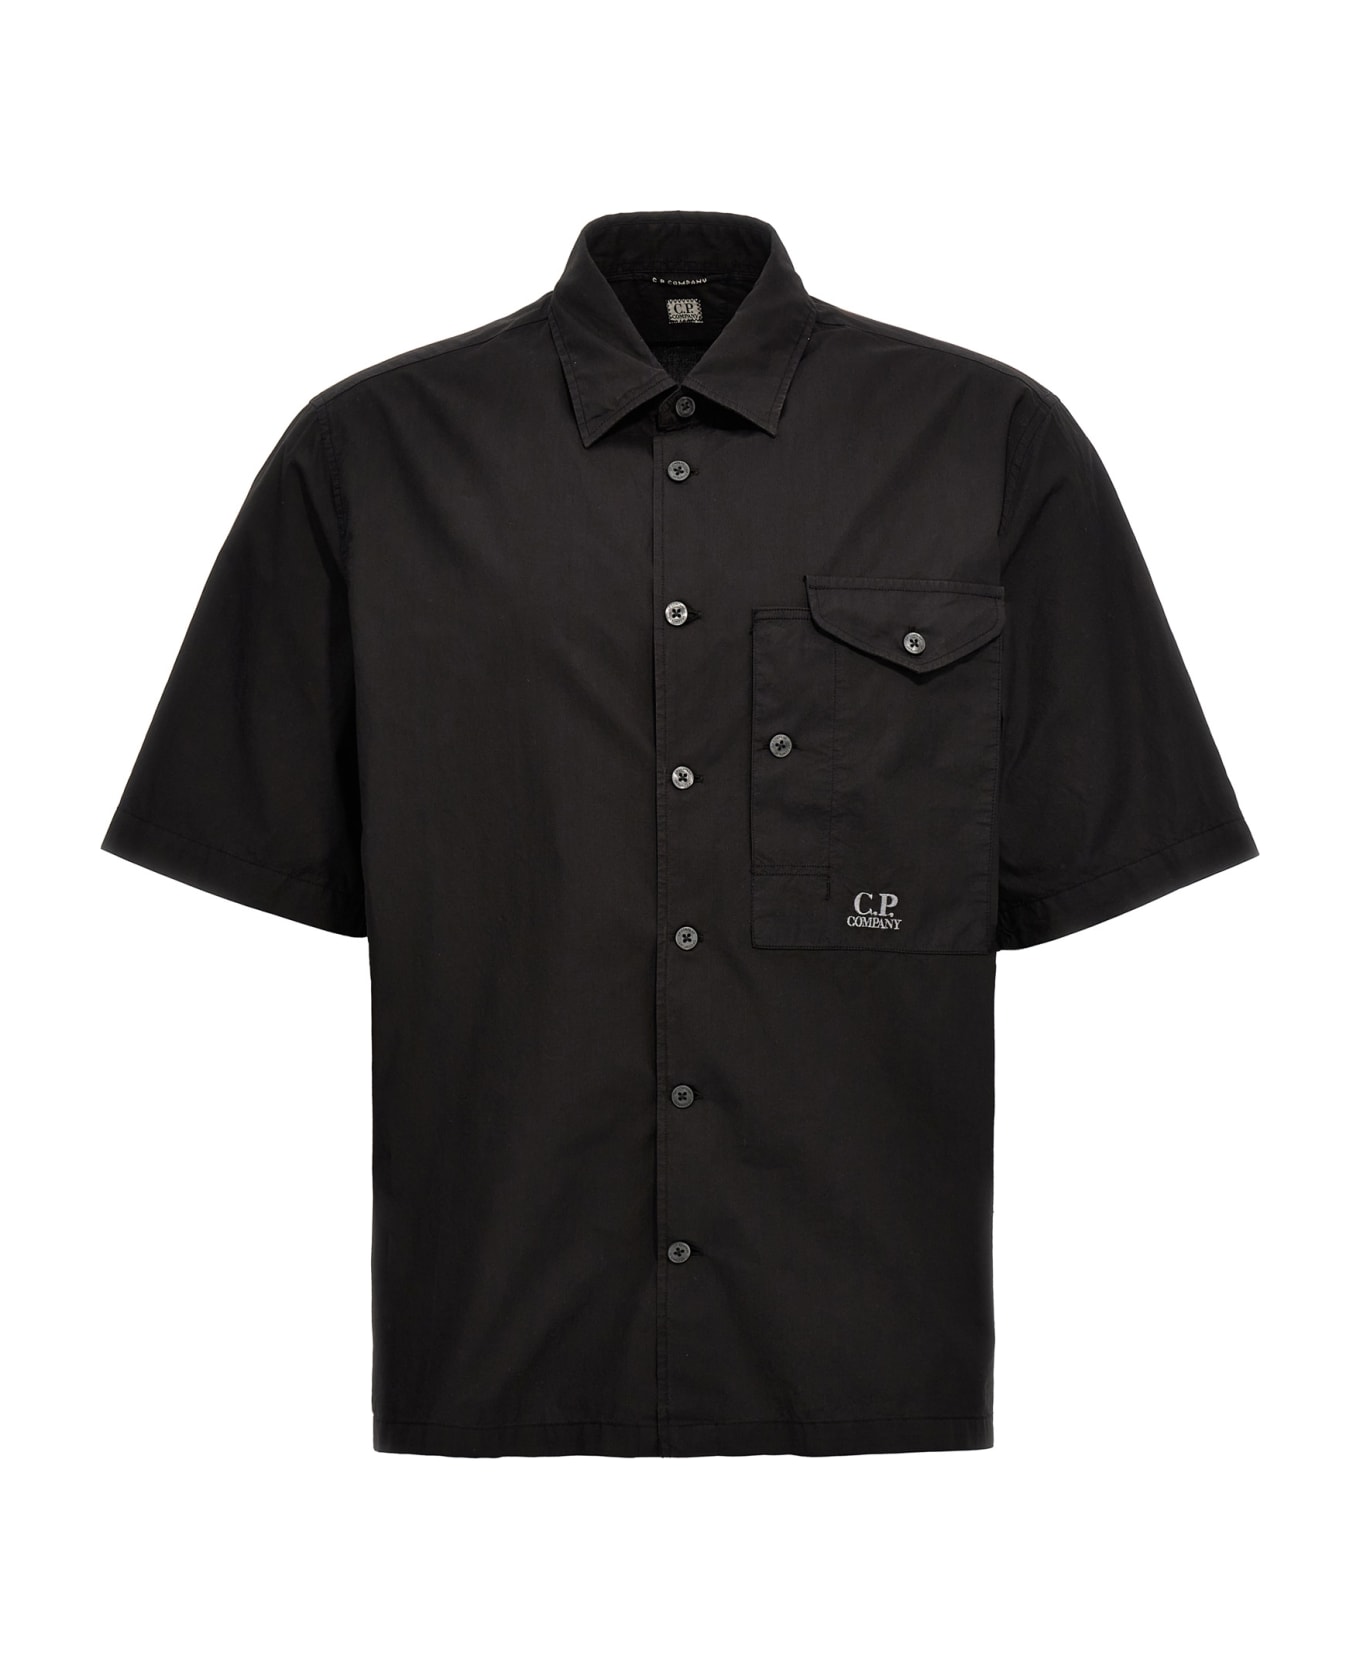 C.P. Company Logo Embroidery Shirt - Black